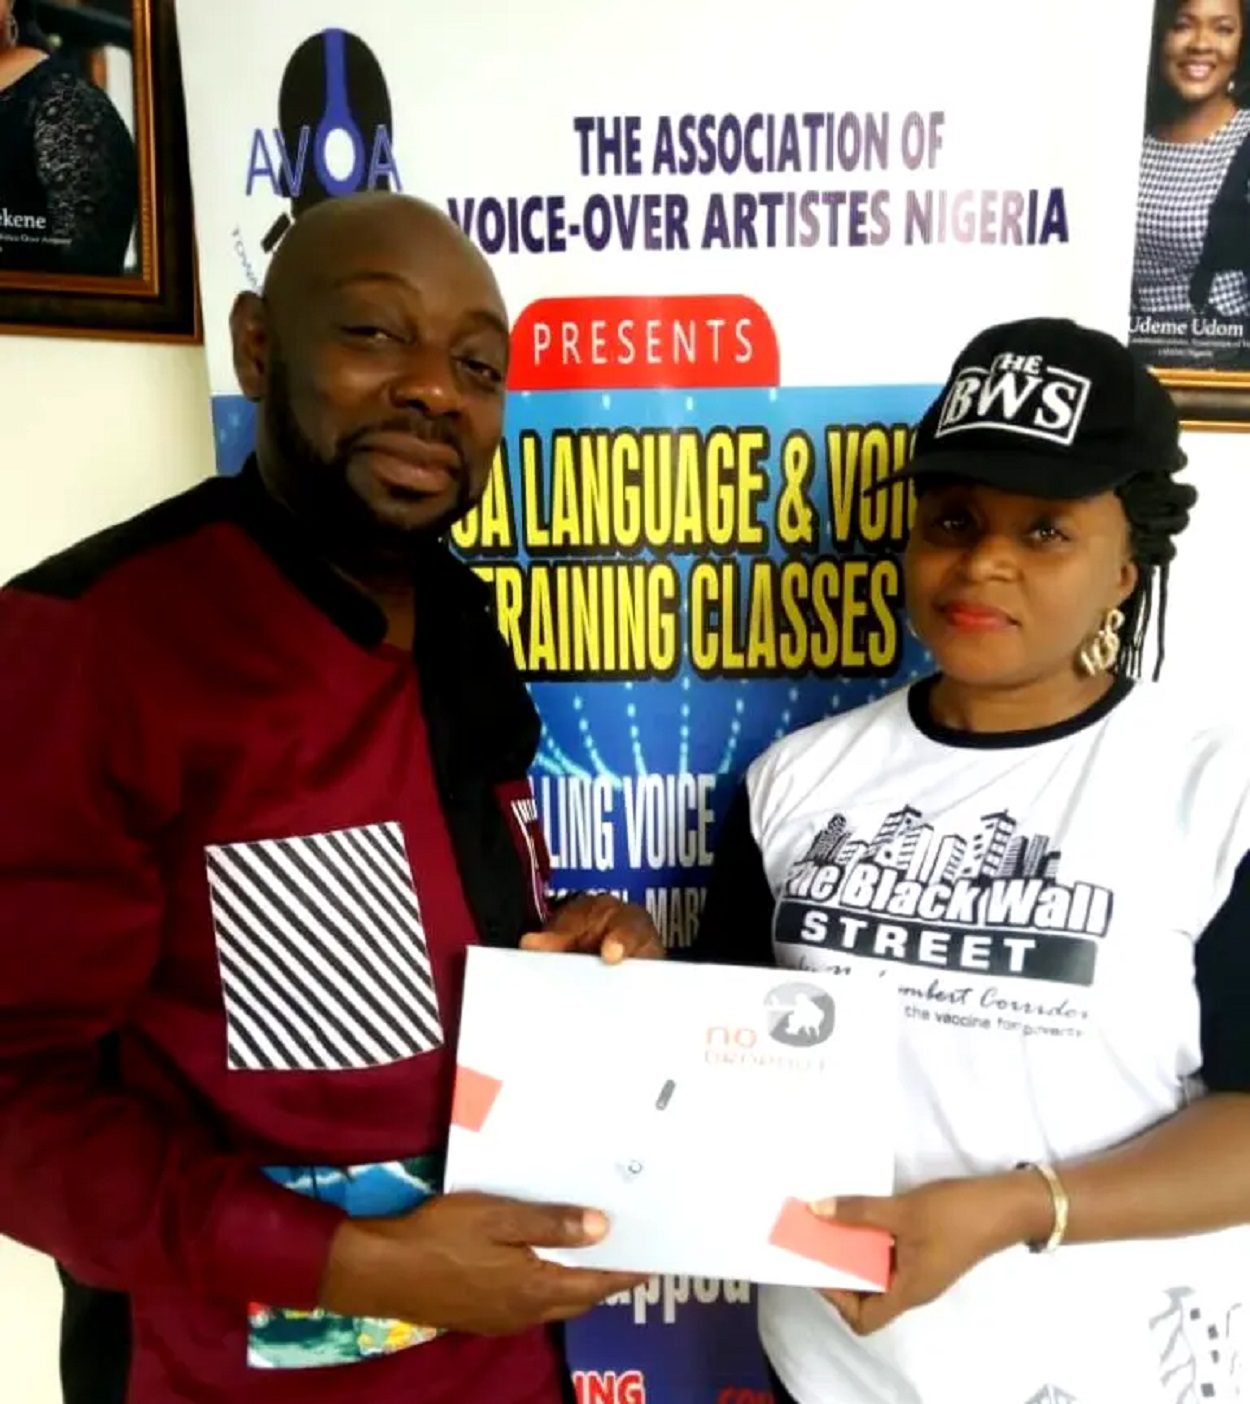 Segun Arinze thanks Black Wall Street for empowering Voice-Over Artistes in Nigeria